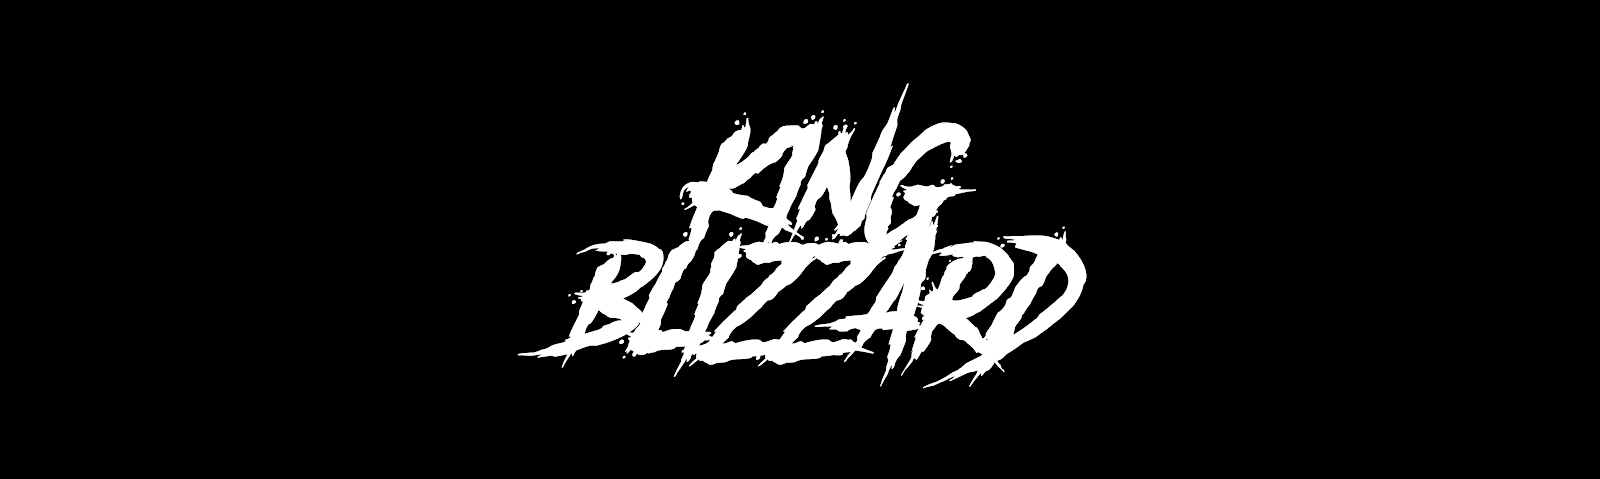 King Blizzard